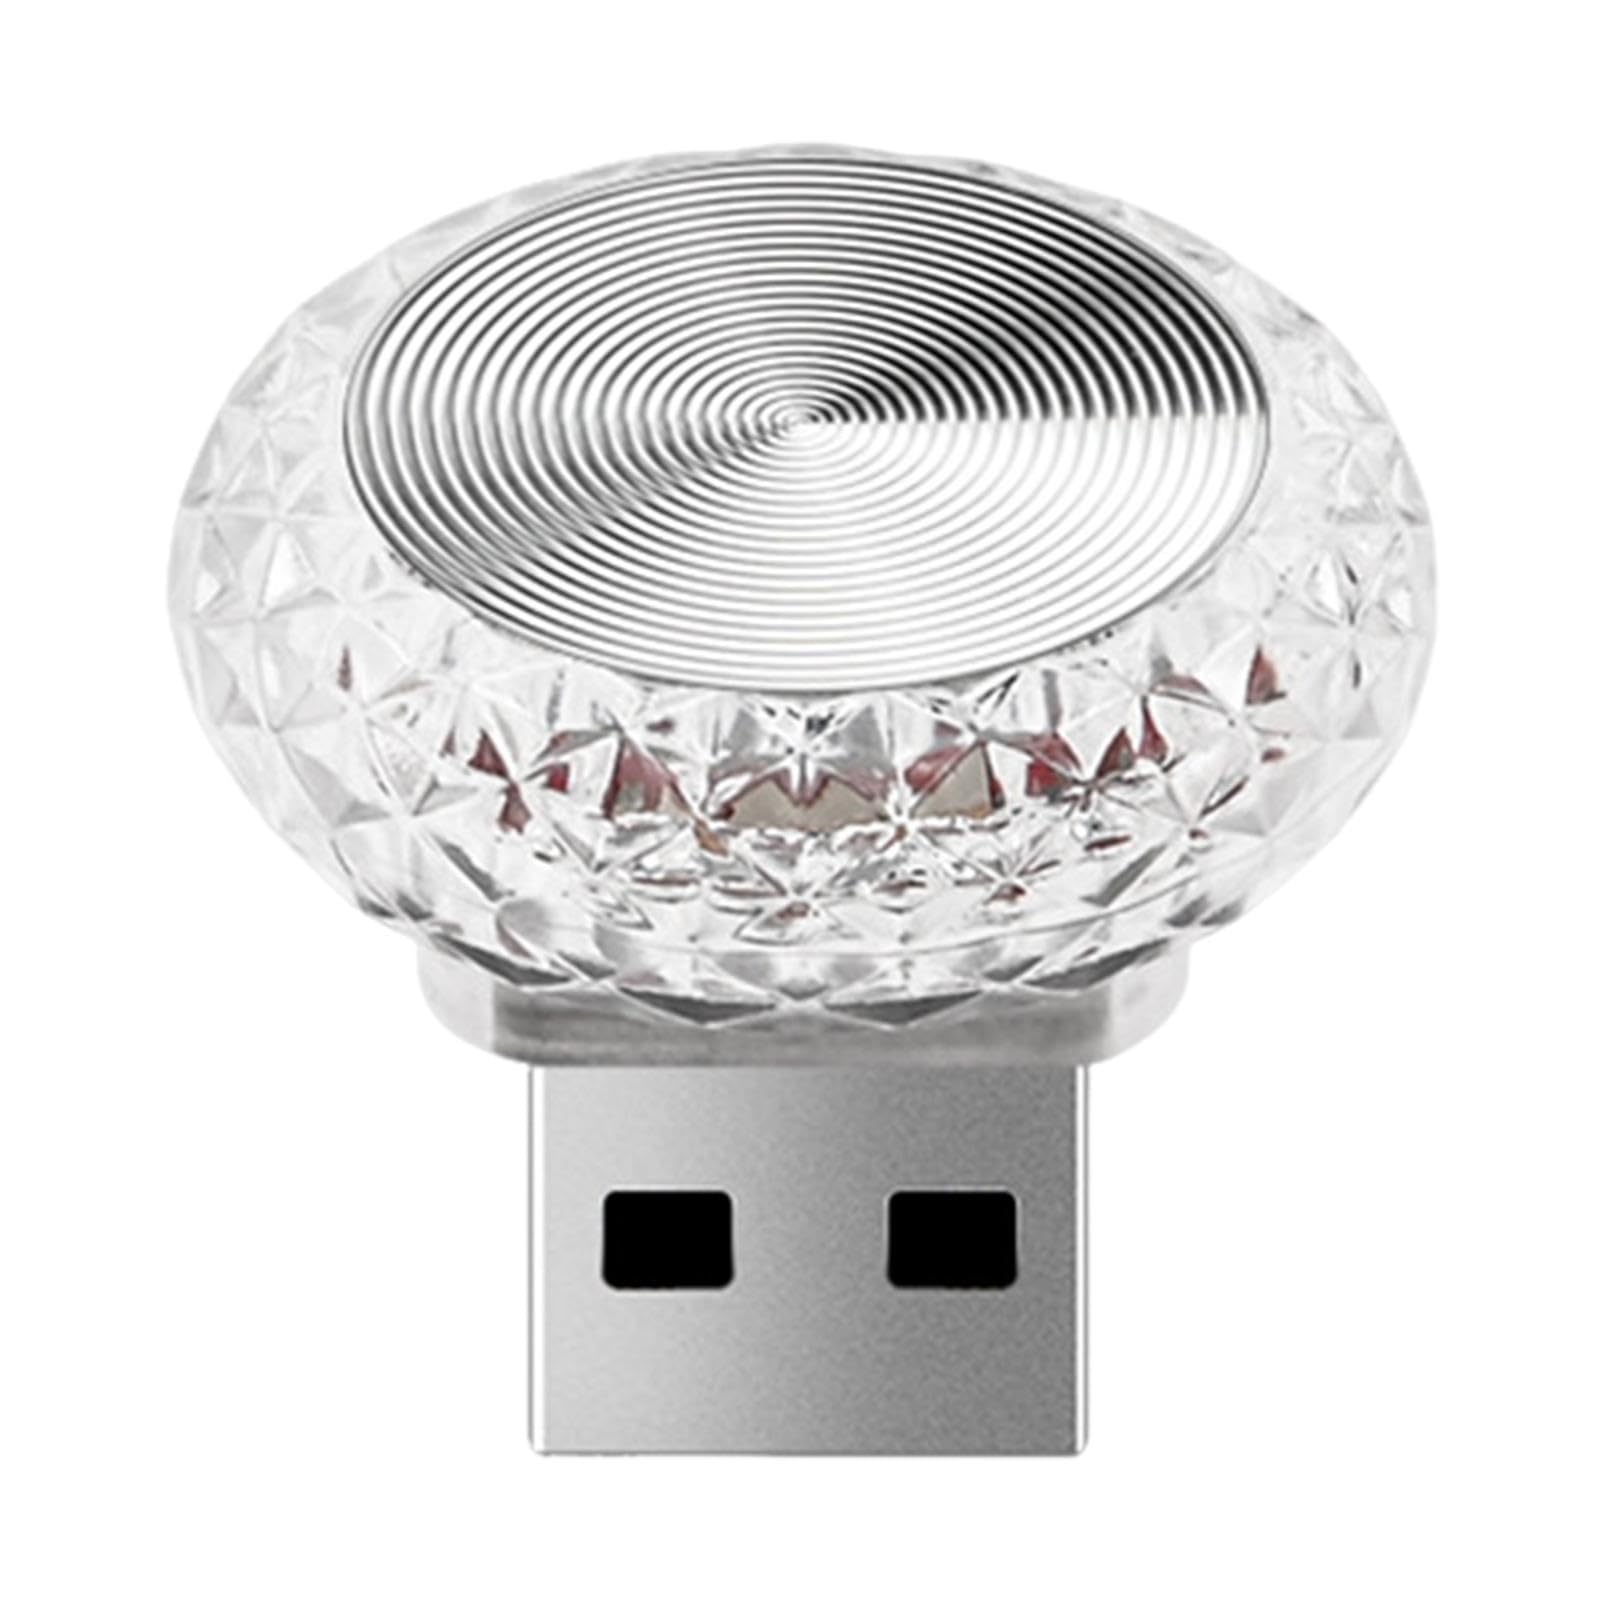 Auto-LED-Leuchten für den Innenraum, USB-Stecker | LED Bunte Nachtdekoration Mini-USB-Licht,Ambientebeleuchtung LED-Leuchten für den Autoinnenraum von Shenrongtong